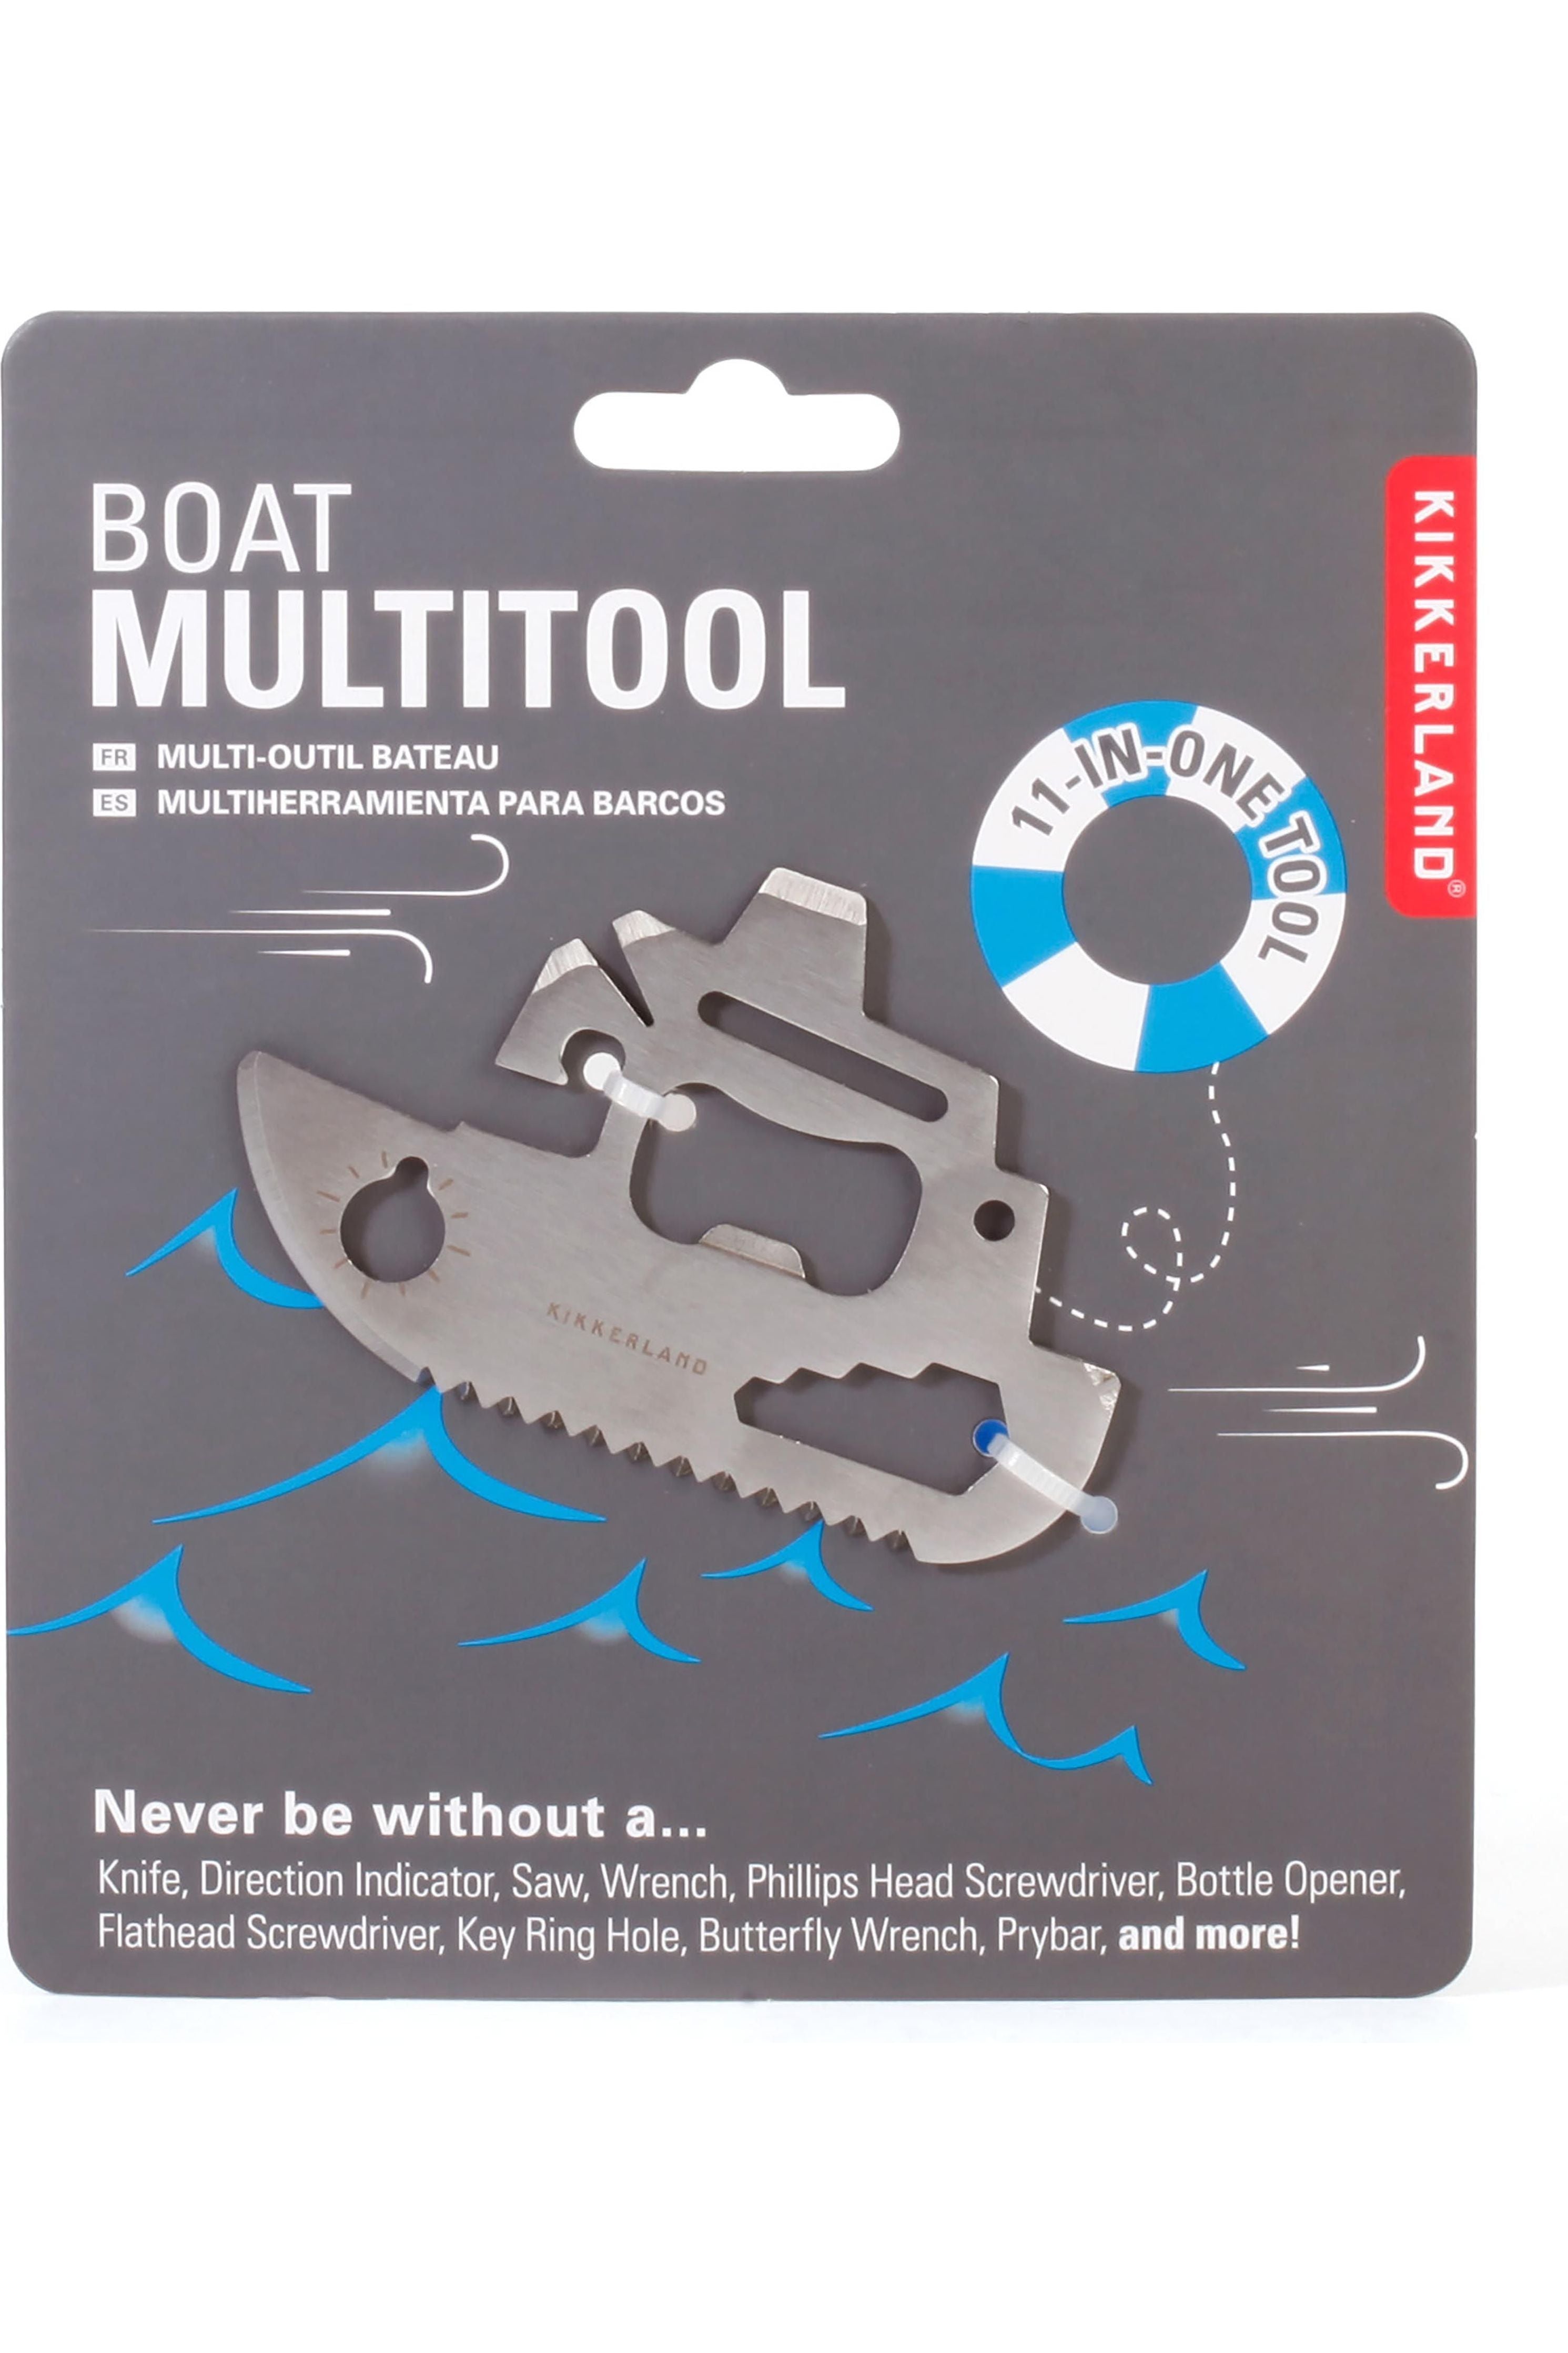 Boat Multitool